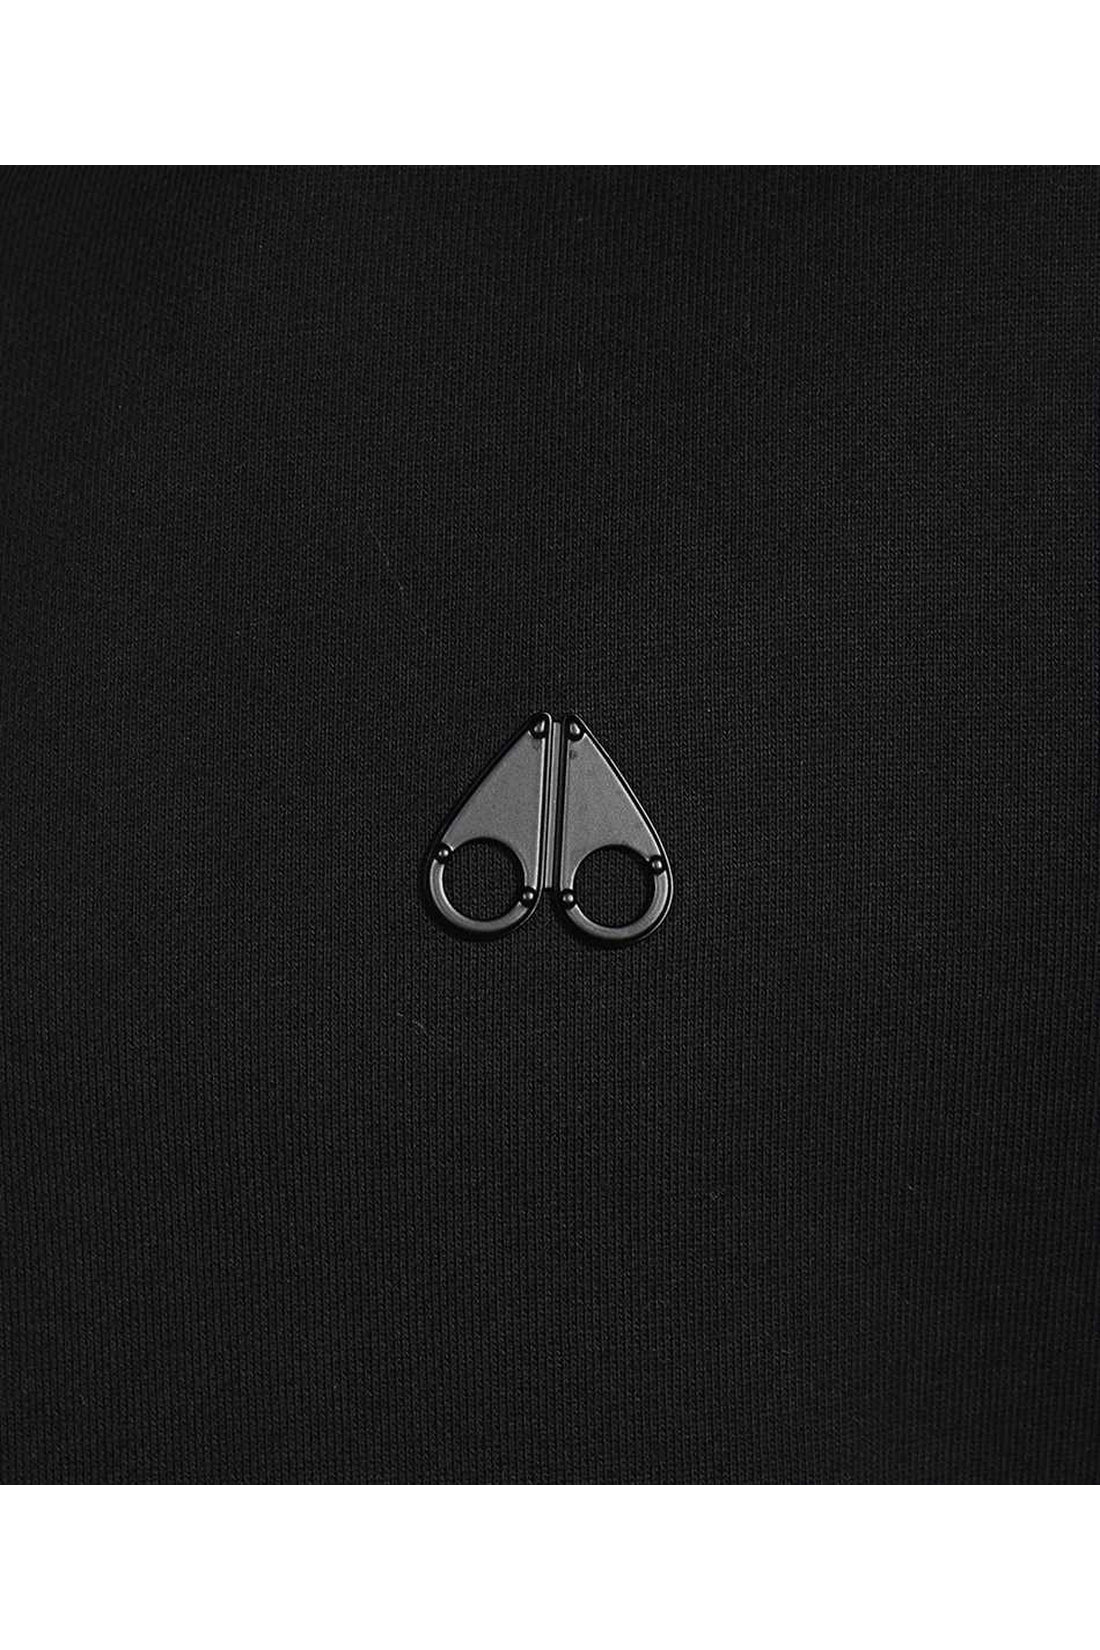 Moose Knuckles-OUTLET-SALE-Cotton hoodie-ARCHIVIST